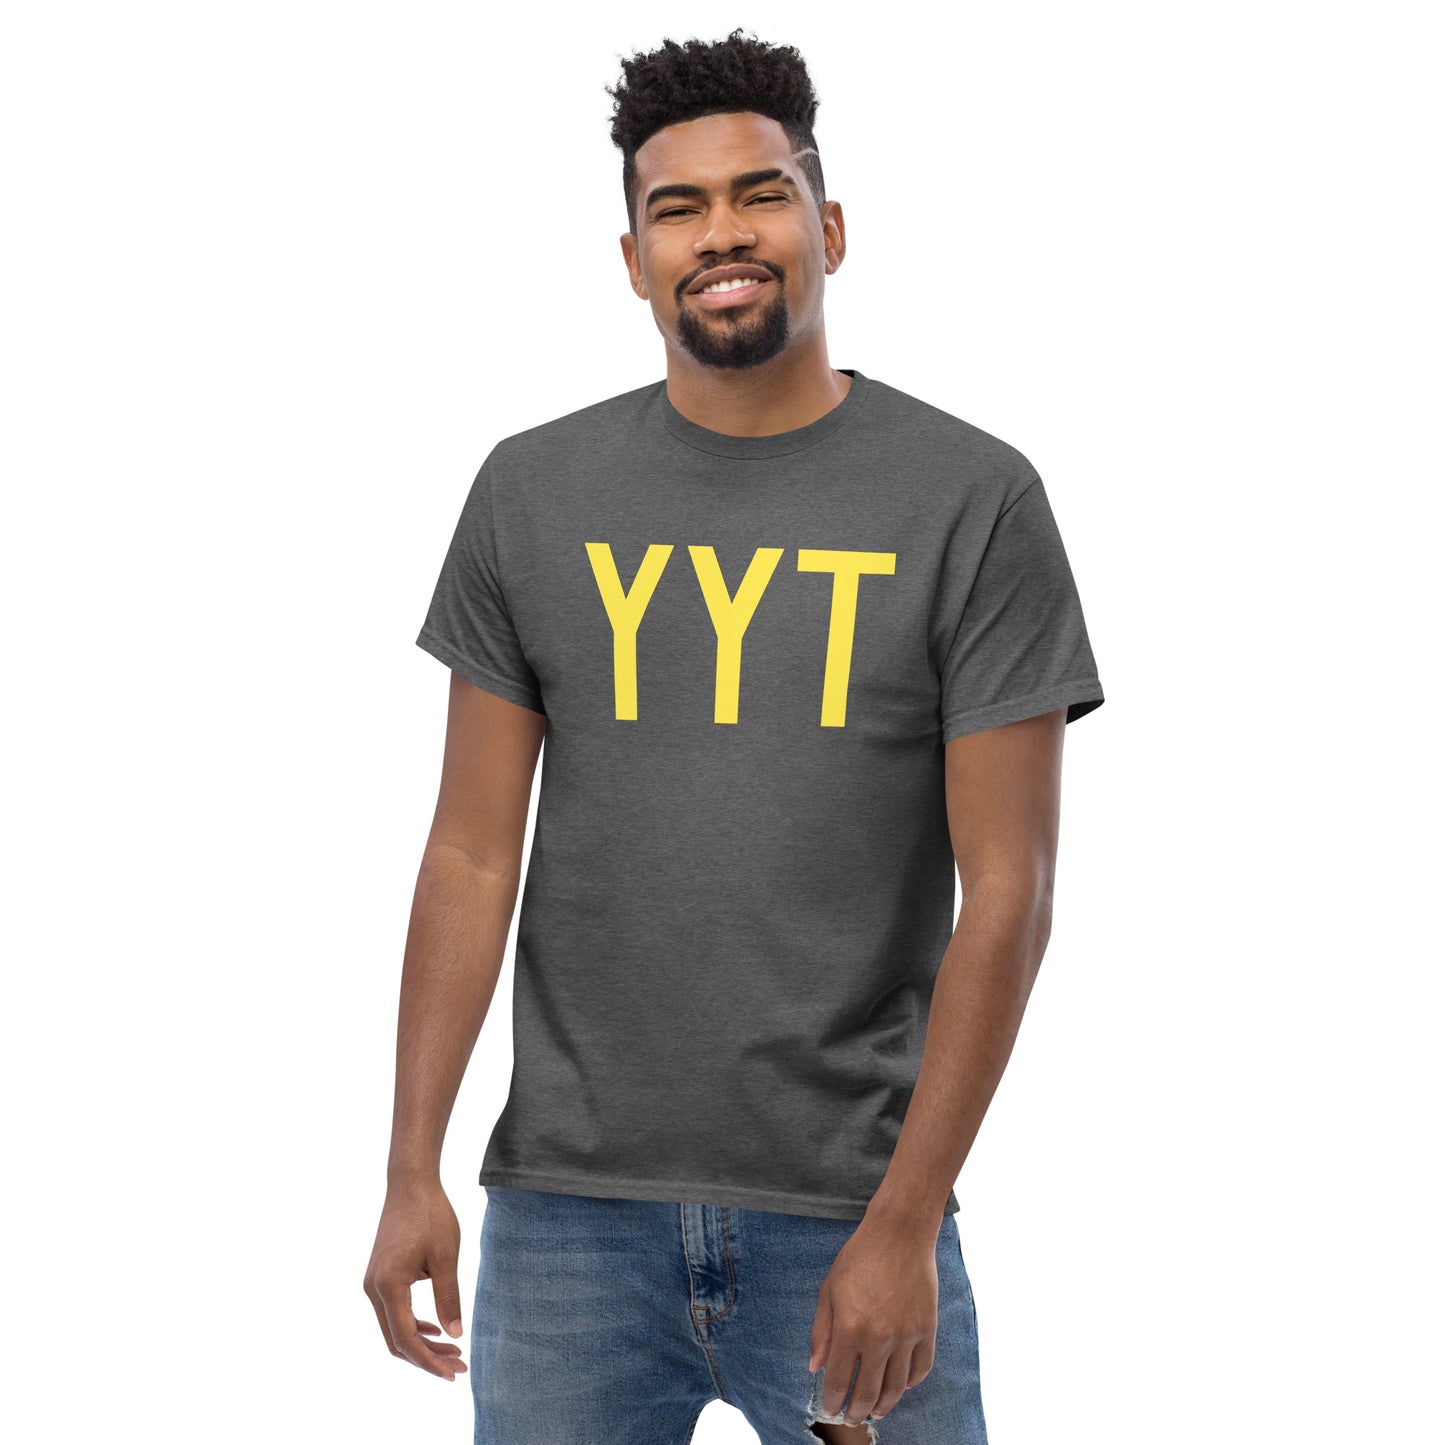 Aviation-Theme Men's T-Shirt - Yellow Graphic • YYT St. John's • YHM Designs - Image 06